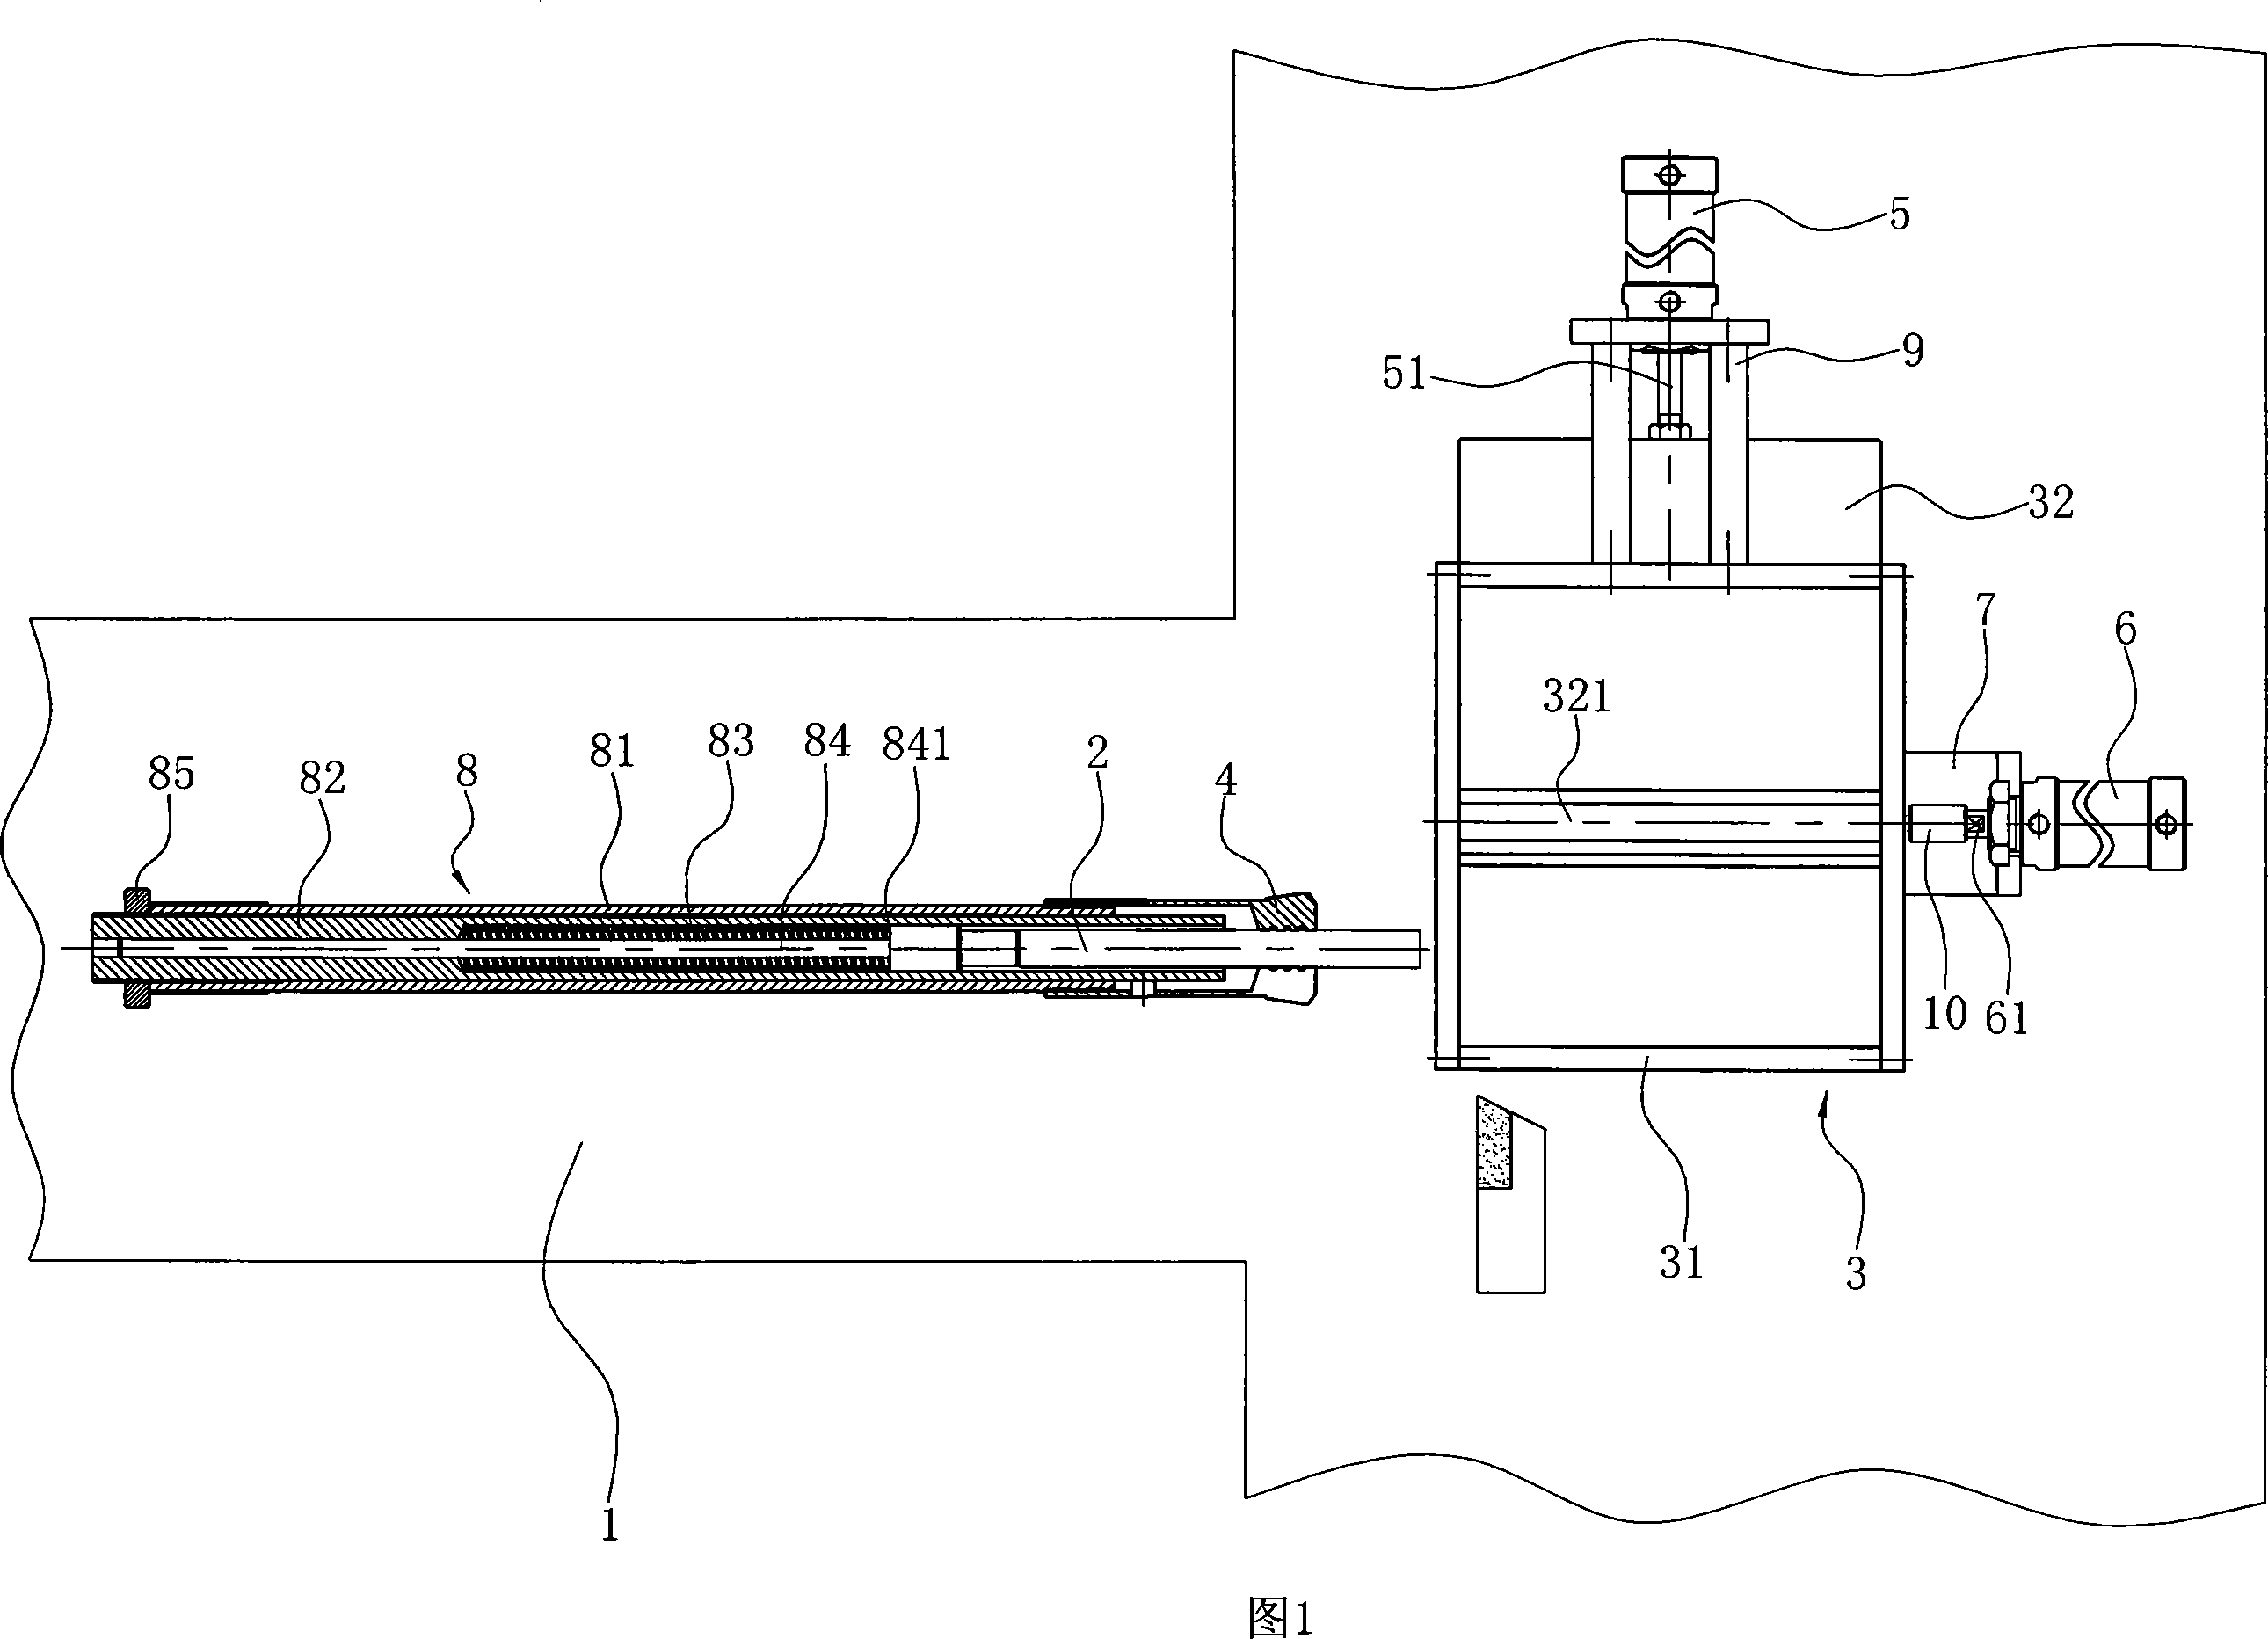 Automatic feeder of machine tool